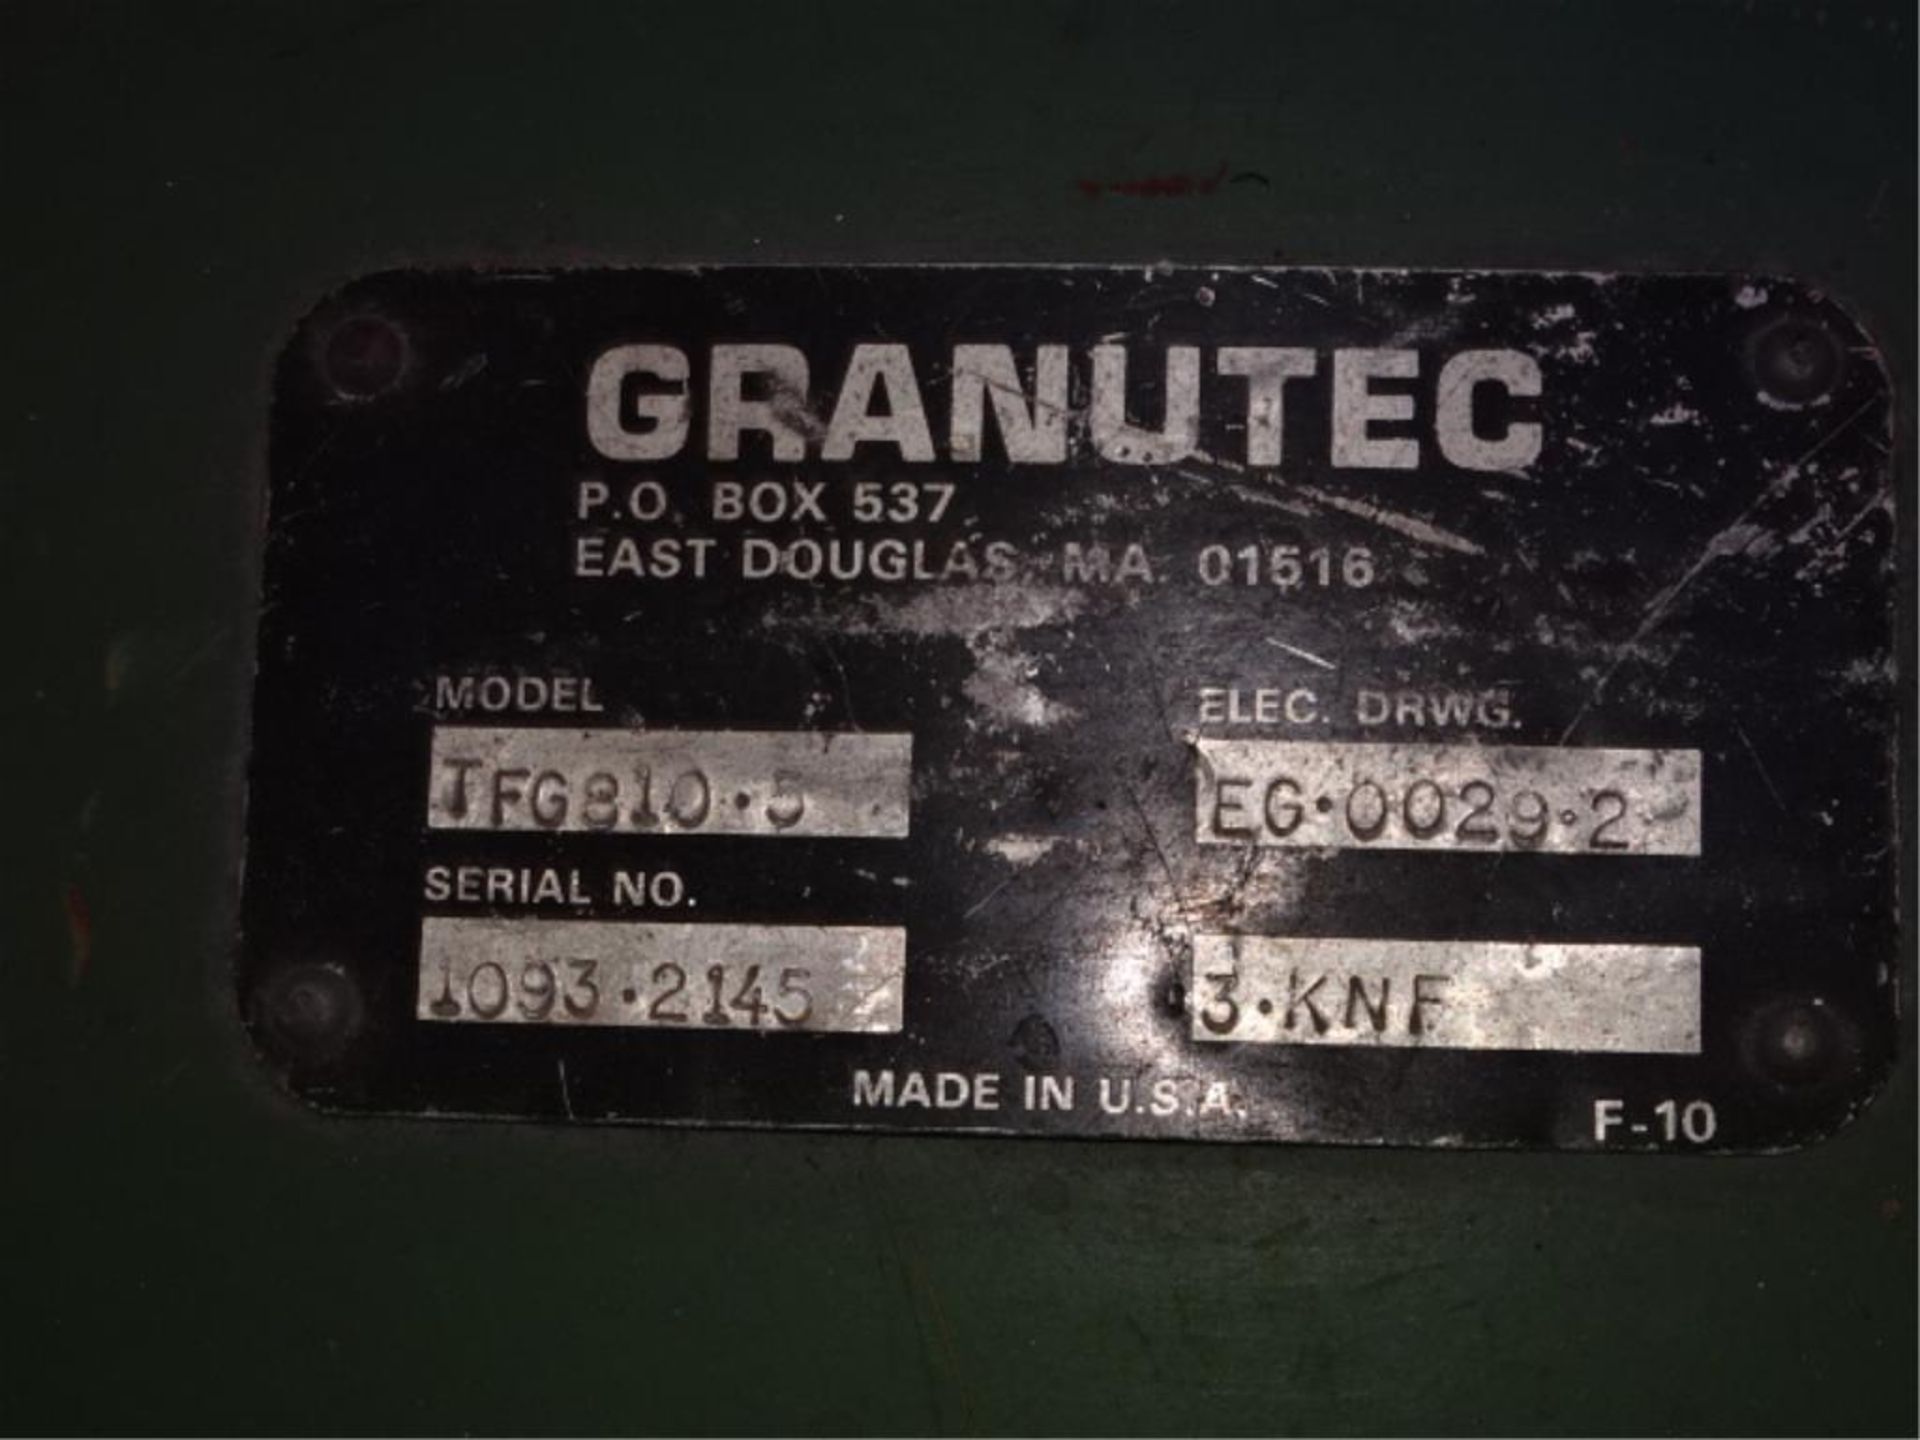 Grautec Granulator - Image 2 of 2